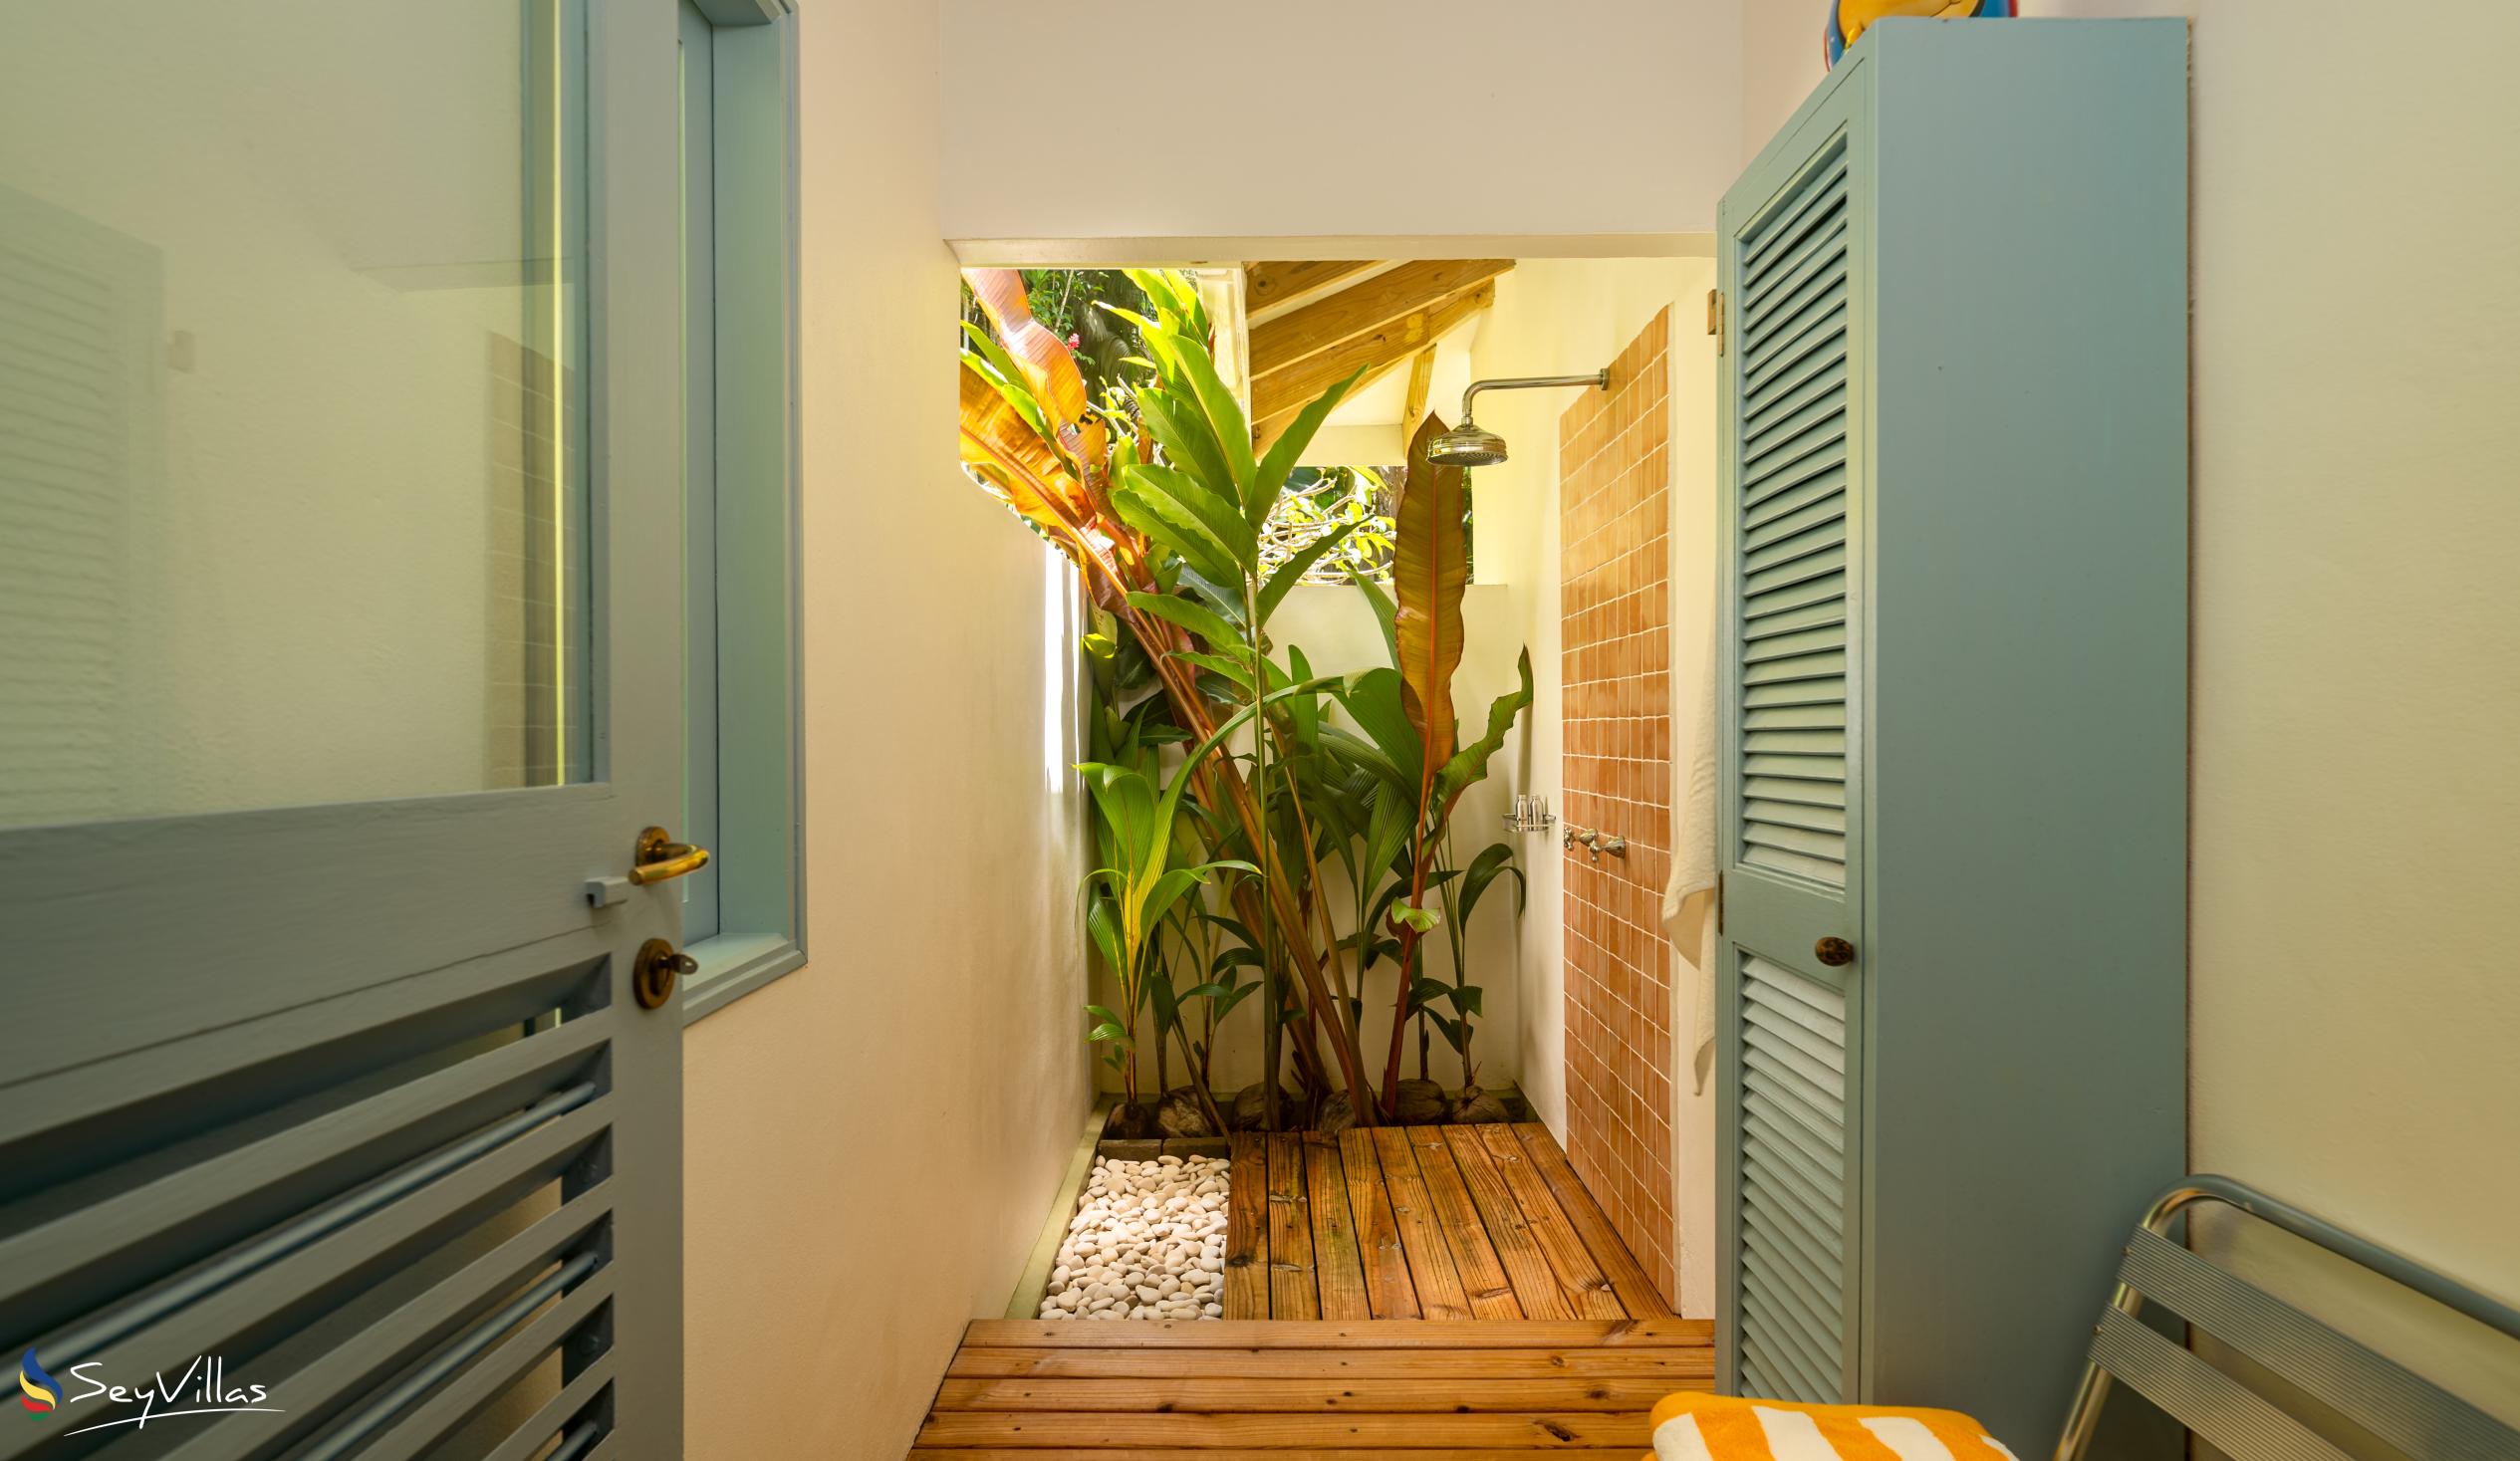 Photo 36: Amuse Bush - 1-Bedroom Villa - Mahé (Seychelles)